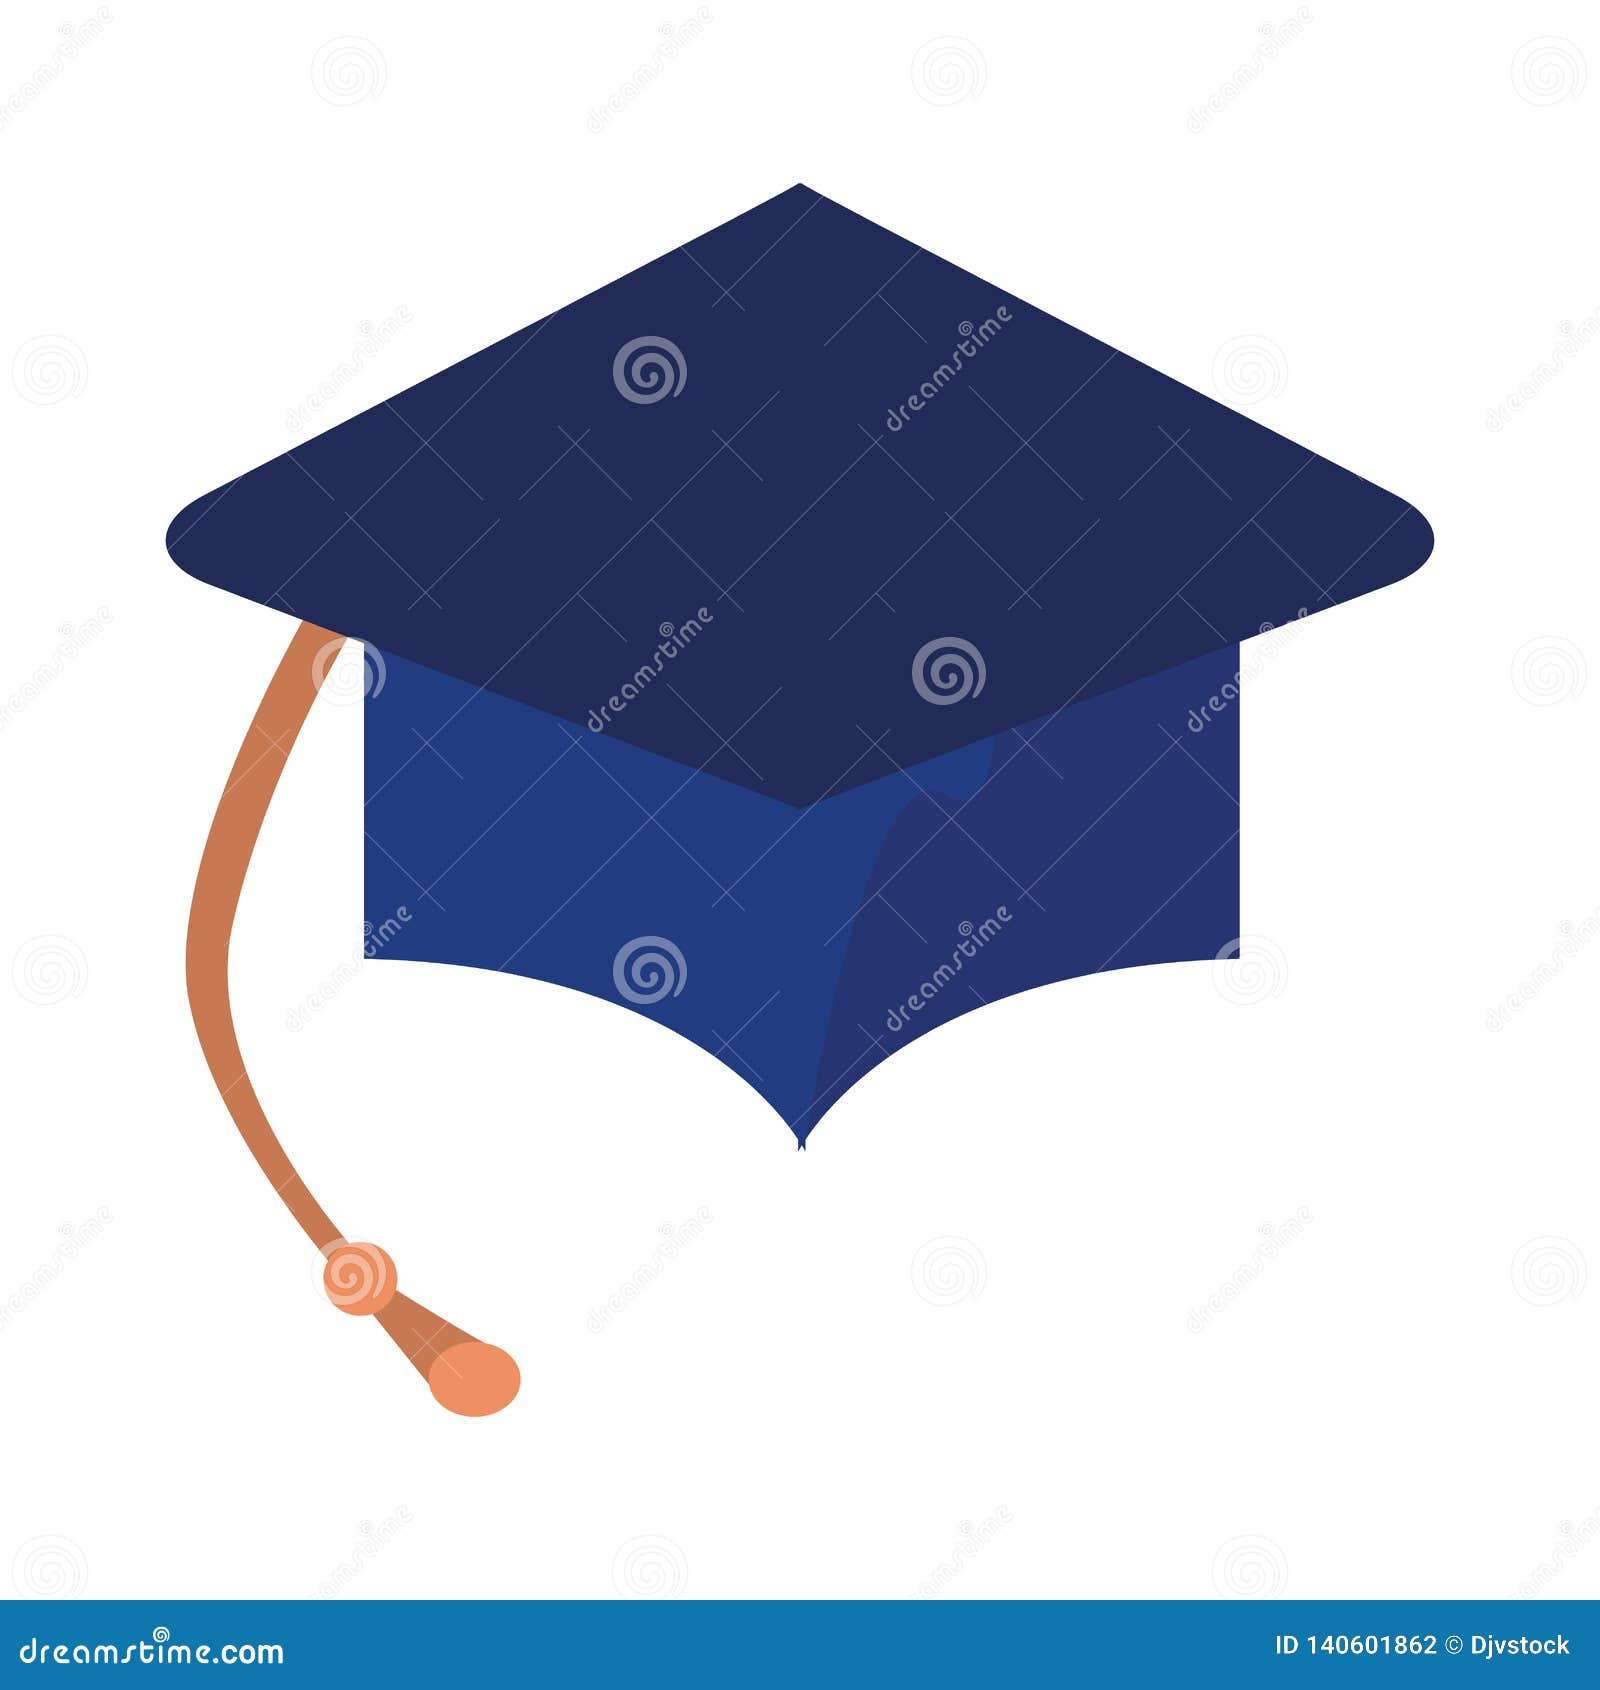 Graduation hat school stock vector. Illustration of sign - 140601862